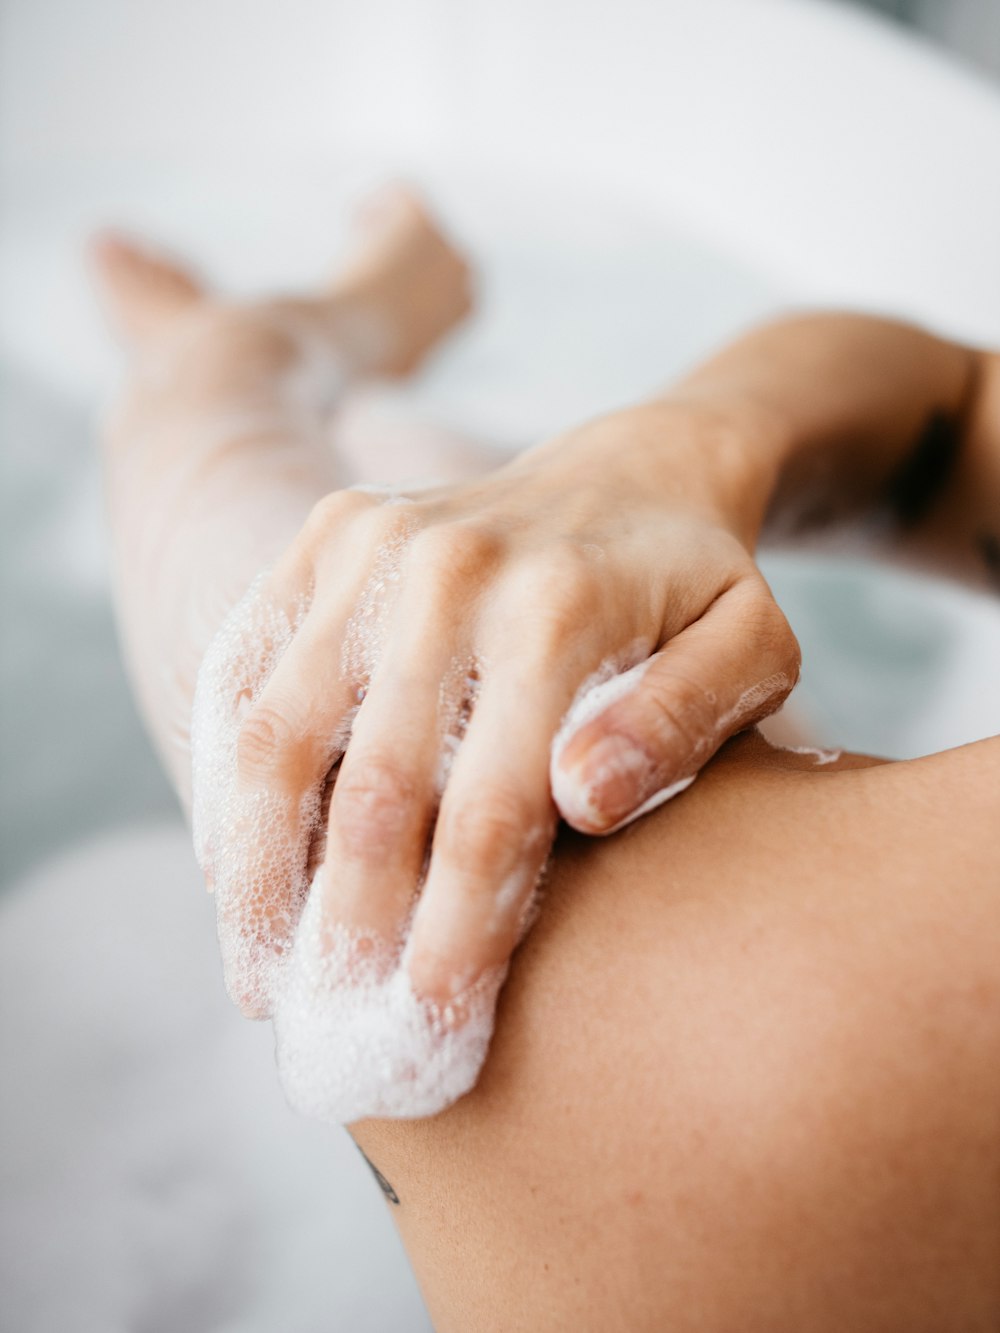 a person washing their arm with soap in a bathtub